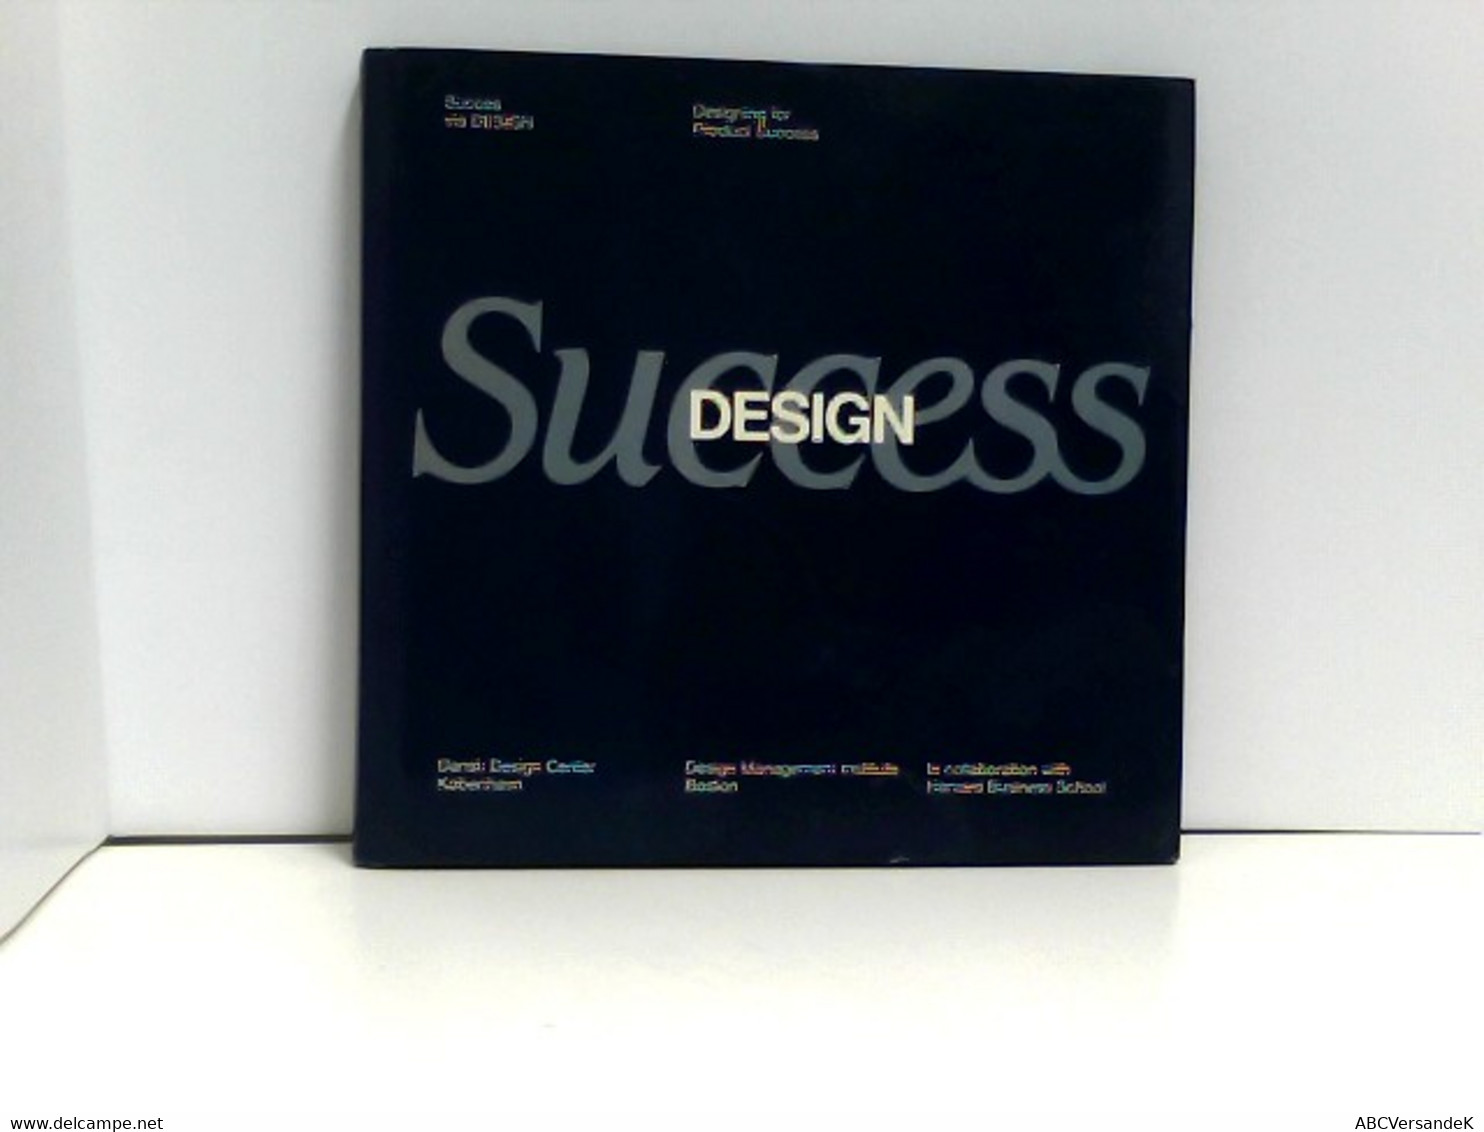 Design Via Success - Grafismo & Diseño